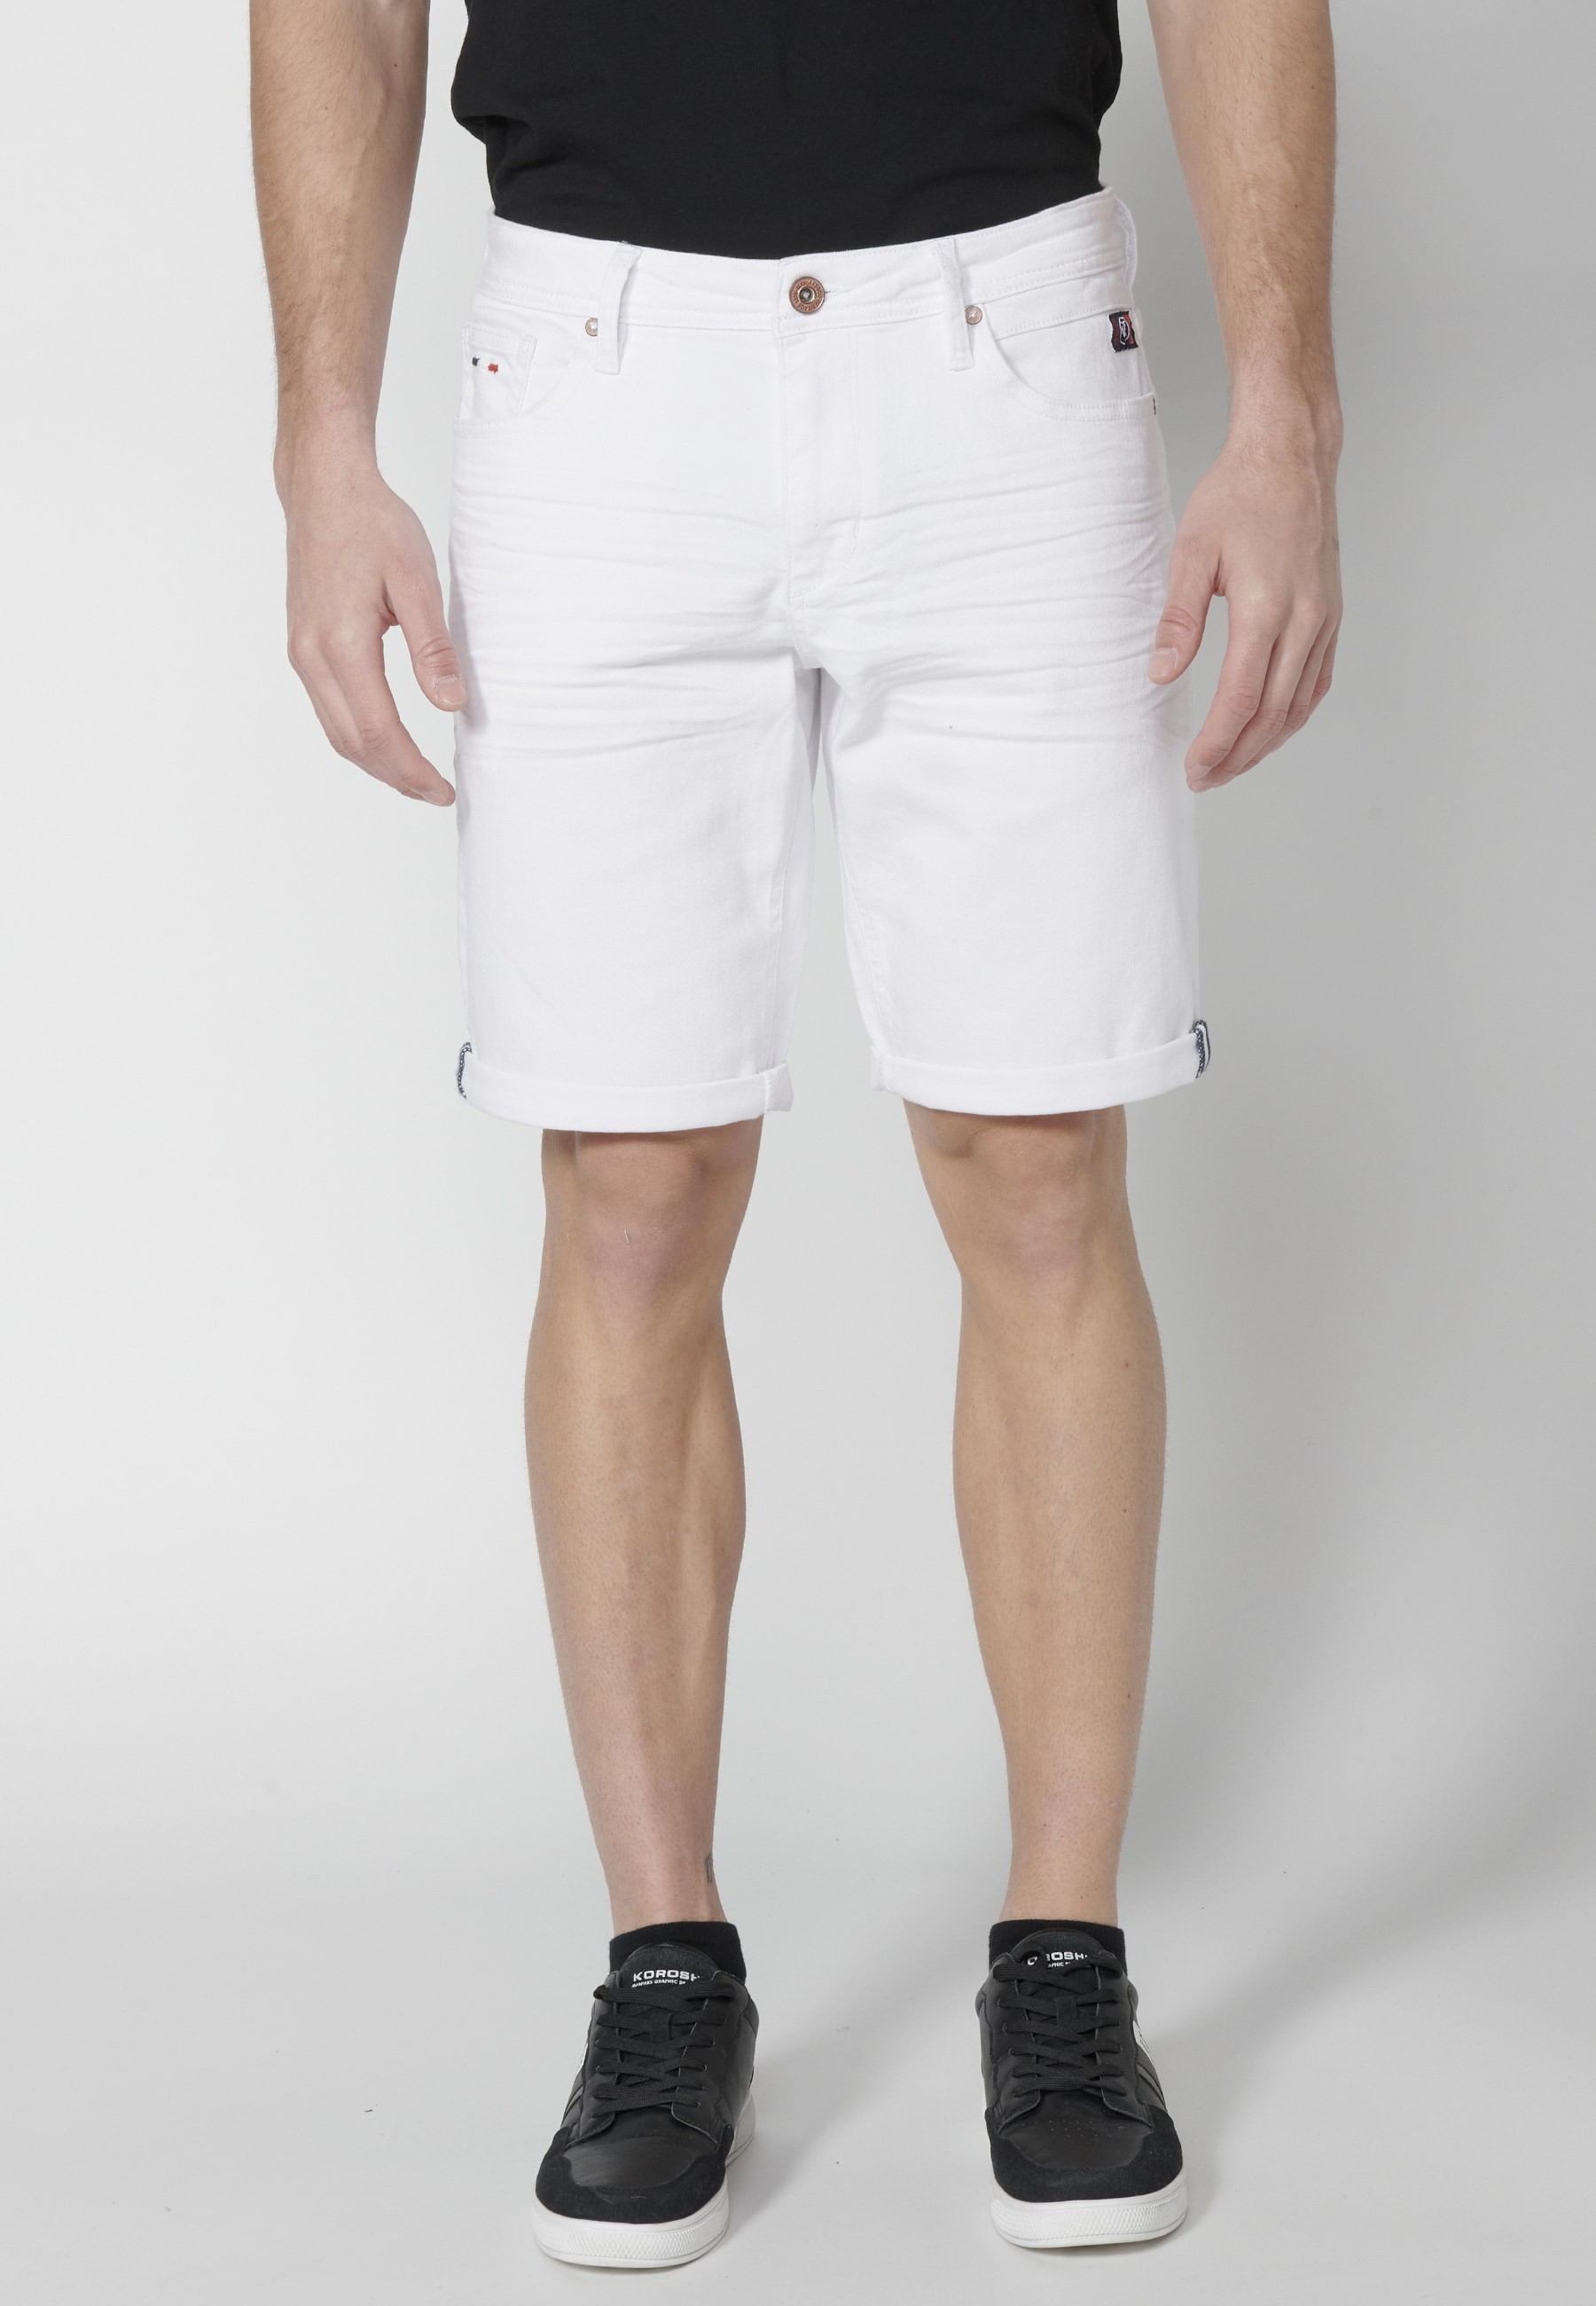 Men's White Stretch Regular Fit Bermuda Denim Shorts with four pockets